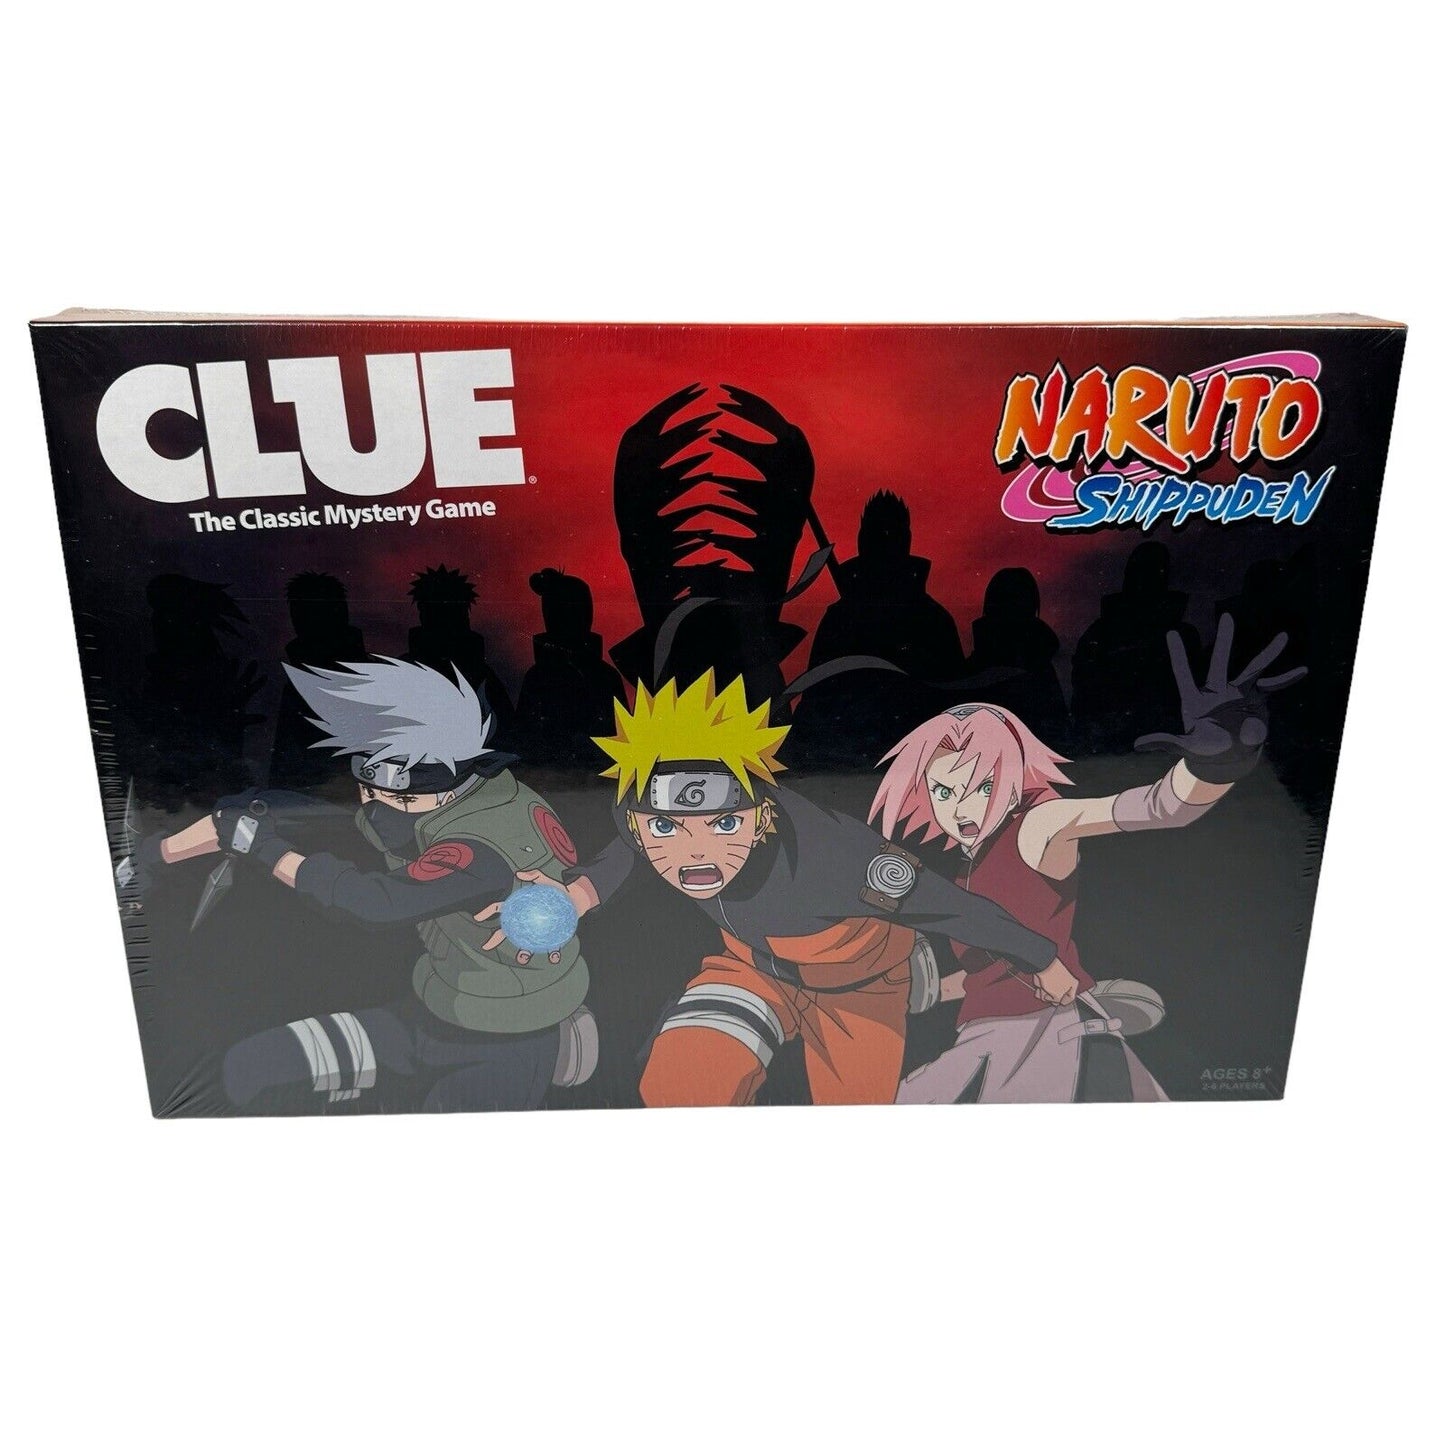 Naruto Shippuden Version Of Clue The Classic Mystery Game Anime Theme NIB